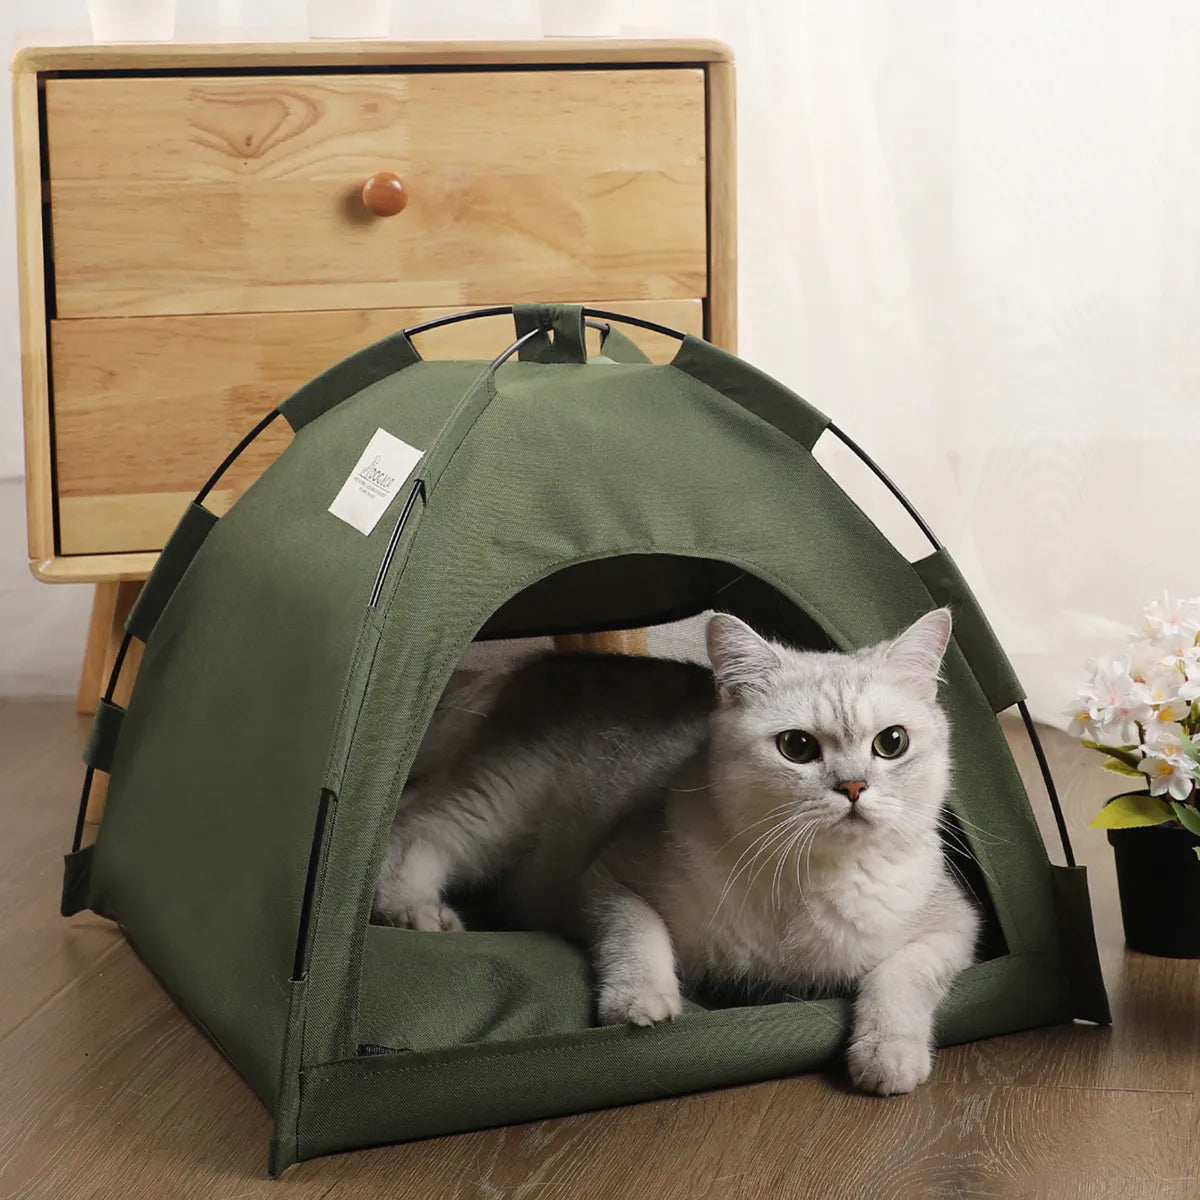 Adventurous or Elegant Pet Tent Beds